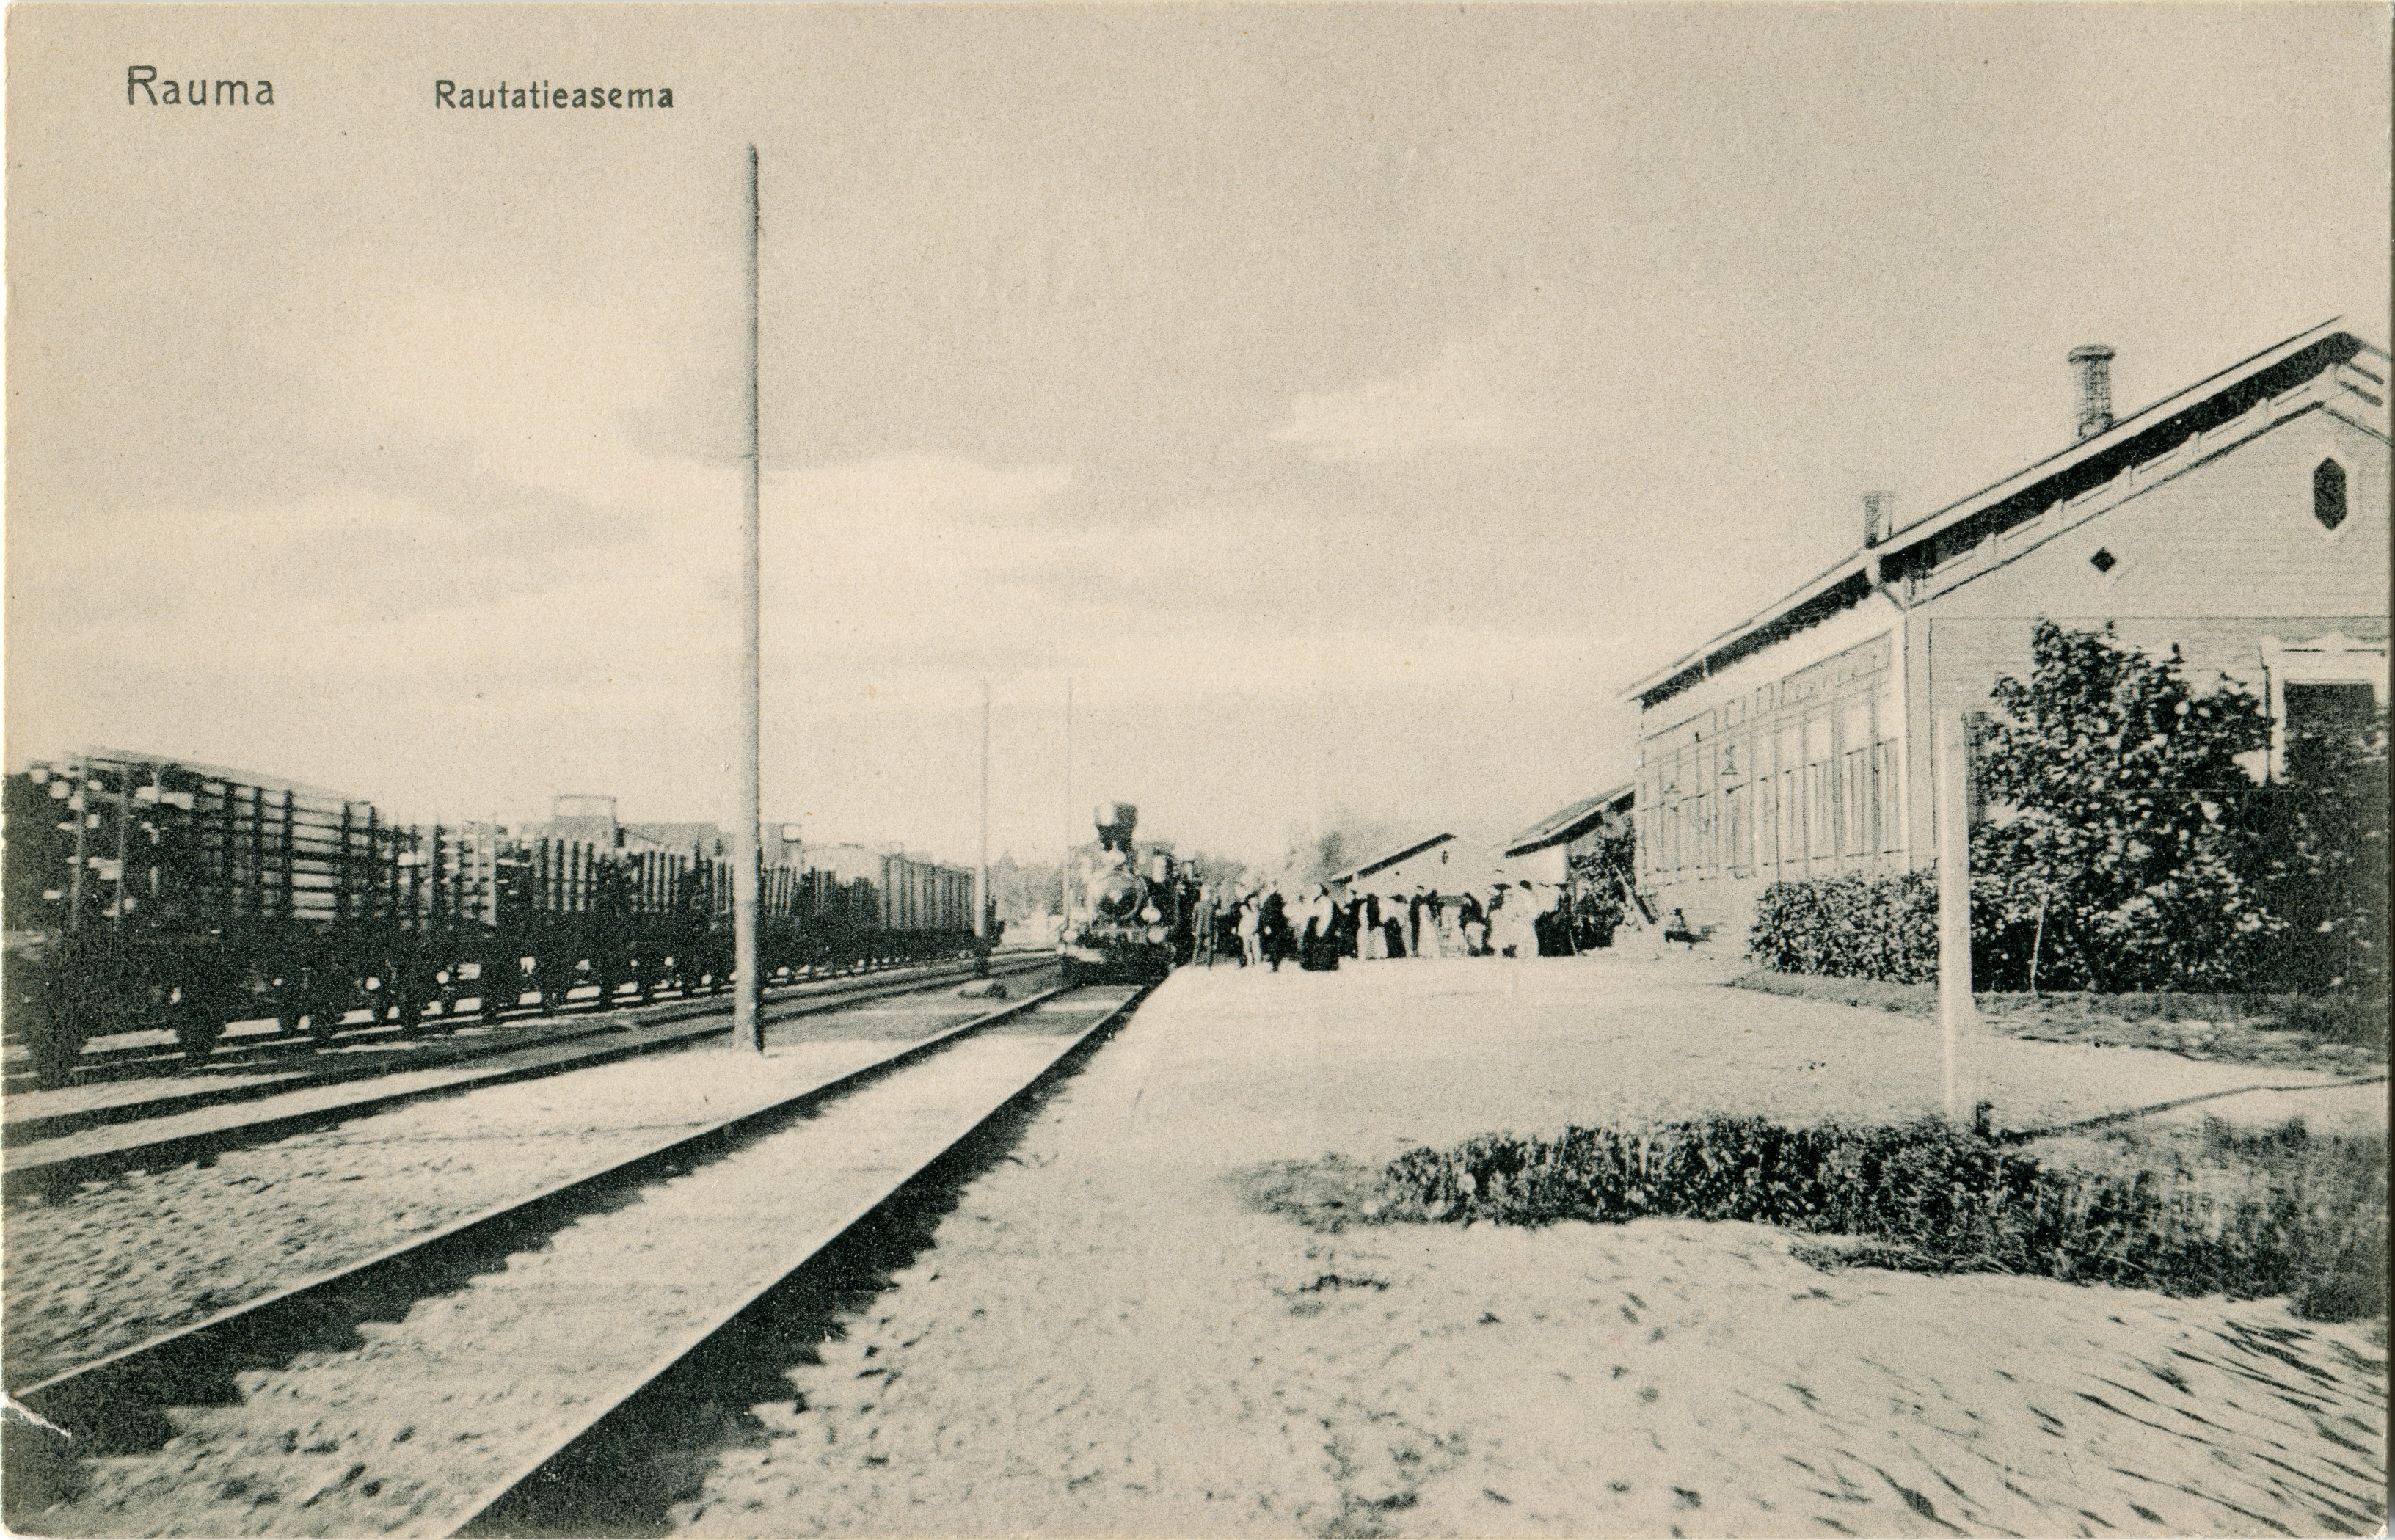 Rauma Railway Station and Railway Garden